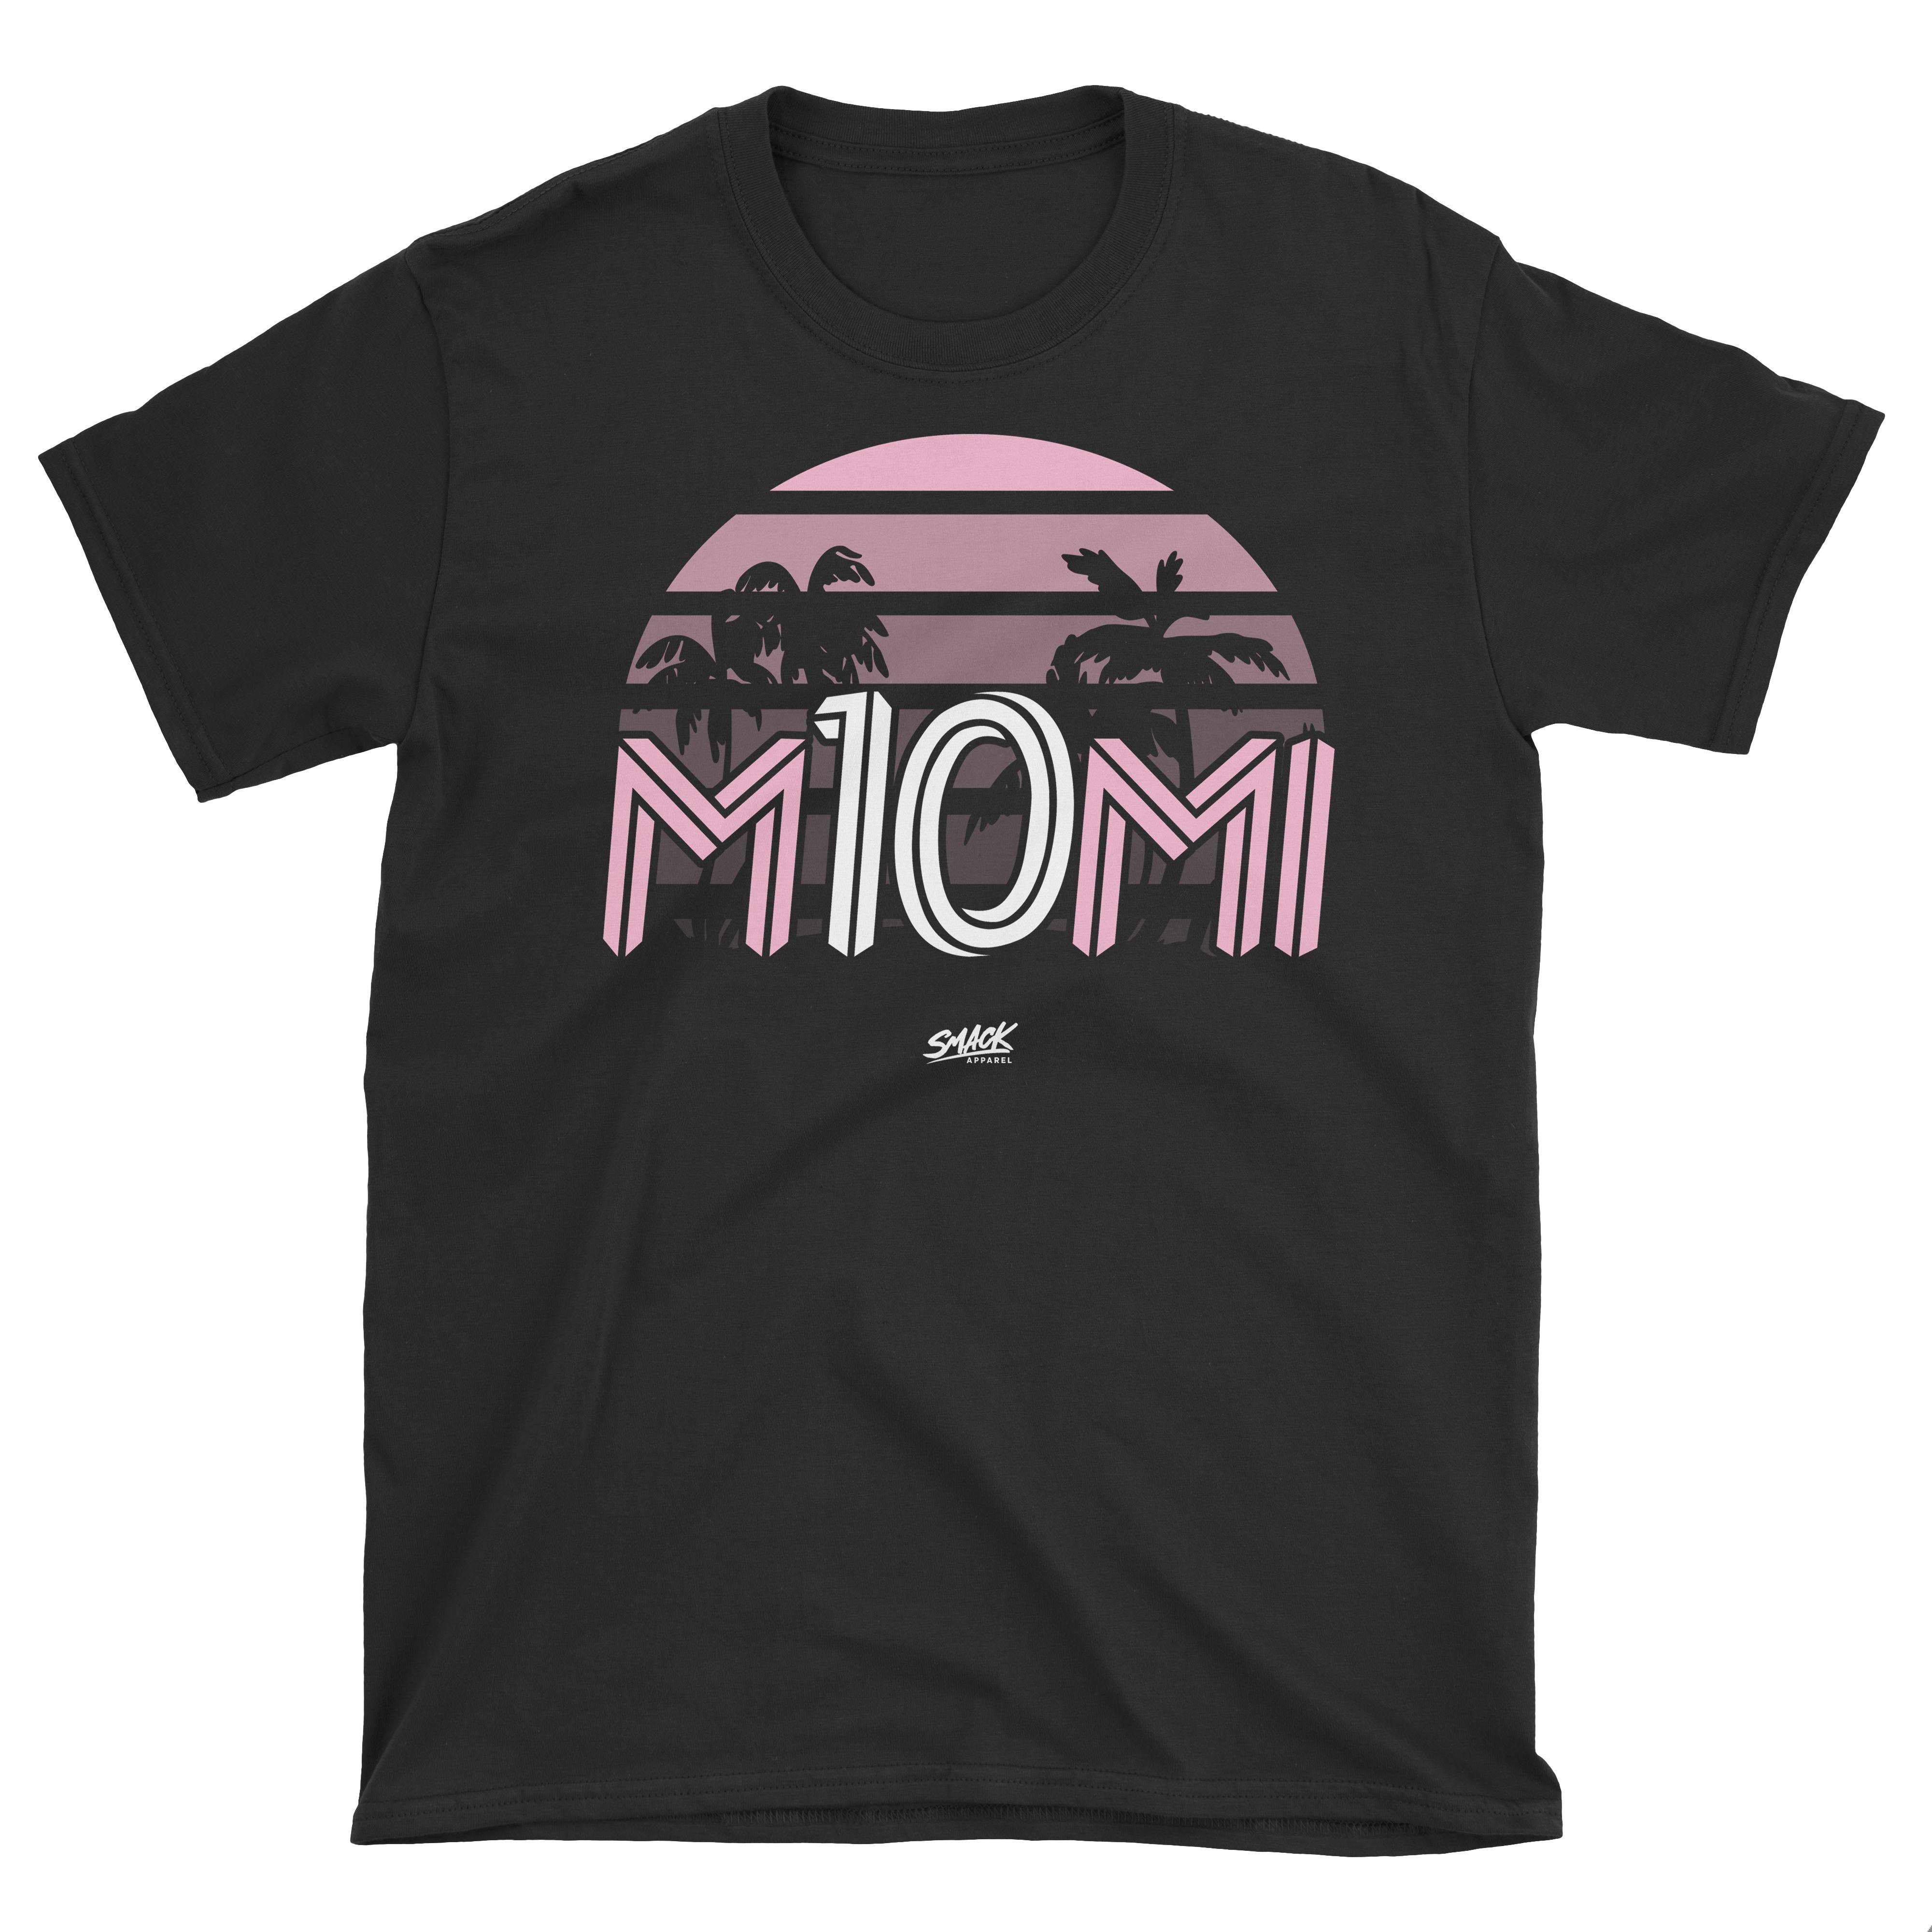 M10MI T-Shirt for Miami Soccer Fans (SM-5XL)